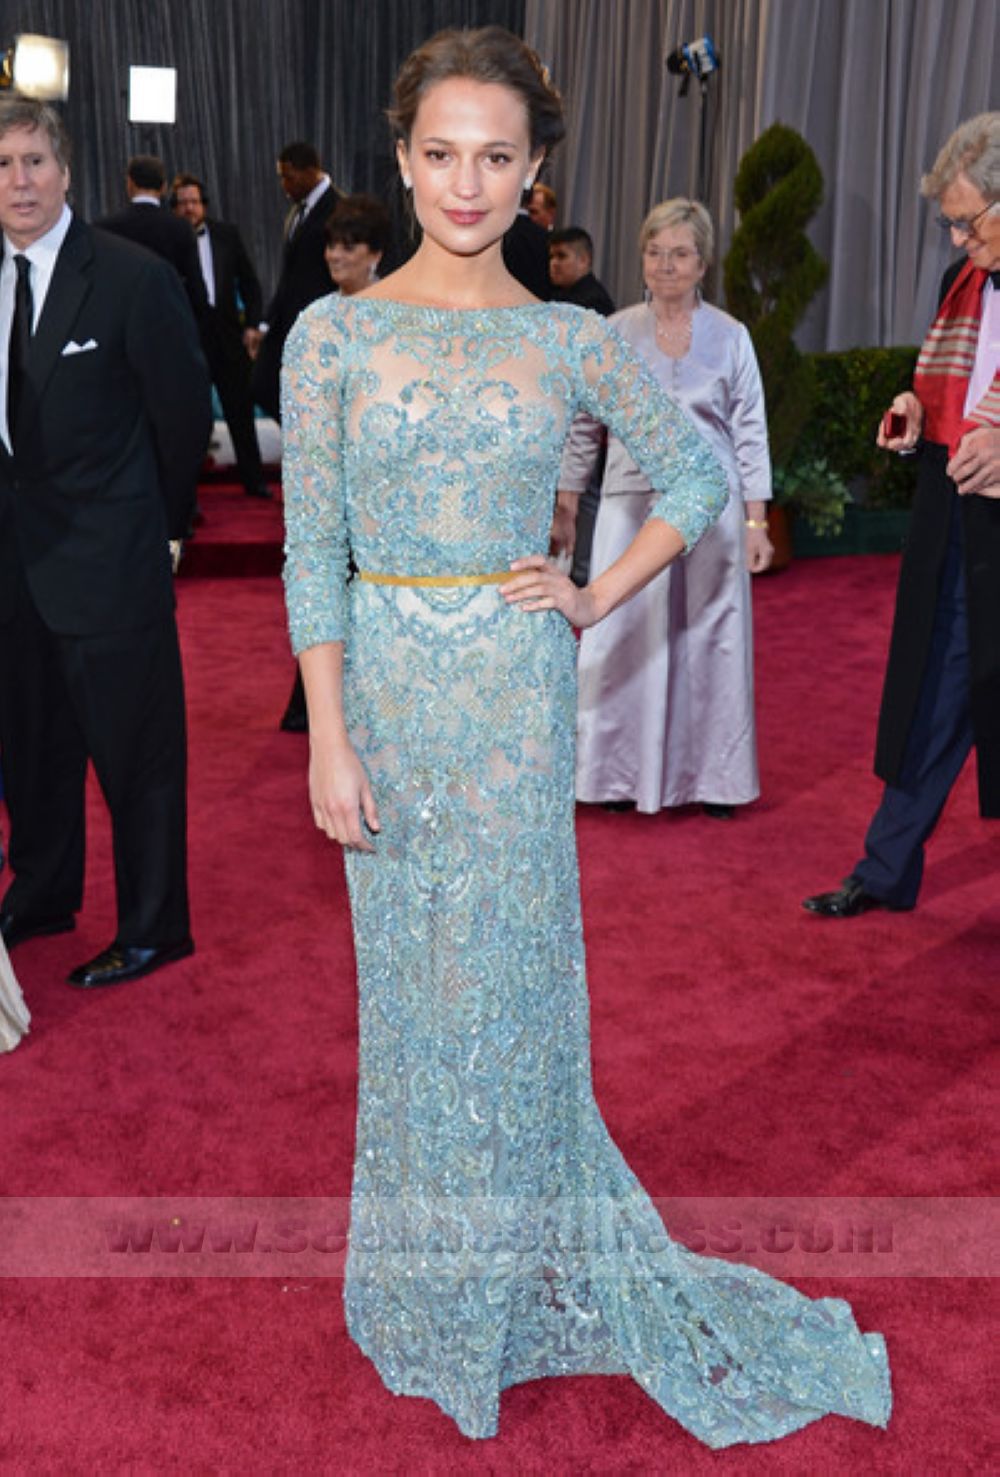 Alicia Vikander 2013 Oscar Celebrity Dress Elie Saab Evening Dress Inspired by Alicia Vikander on 85th Academy Awards Oscar